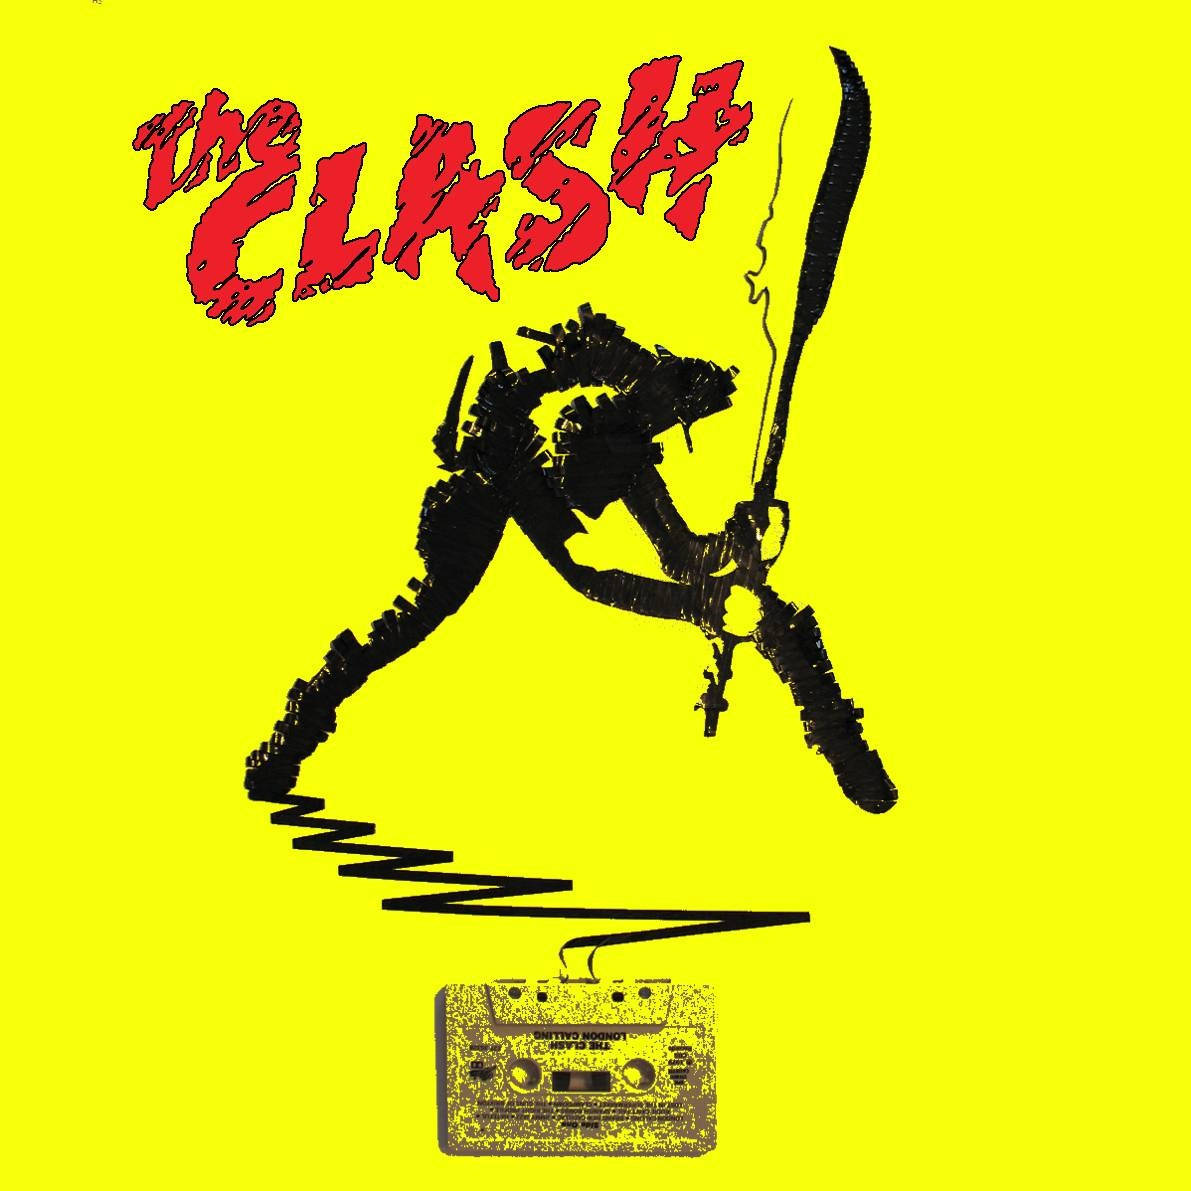 The Clash London Calling Album Cover Art Wallpaper